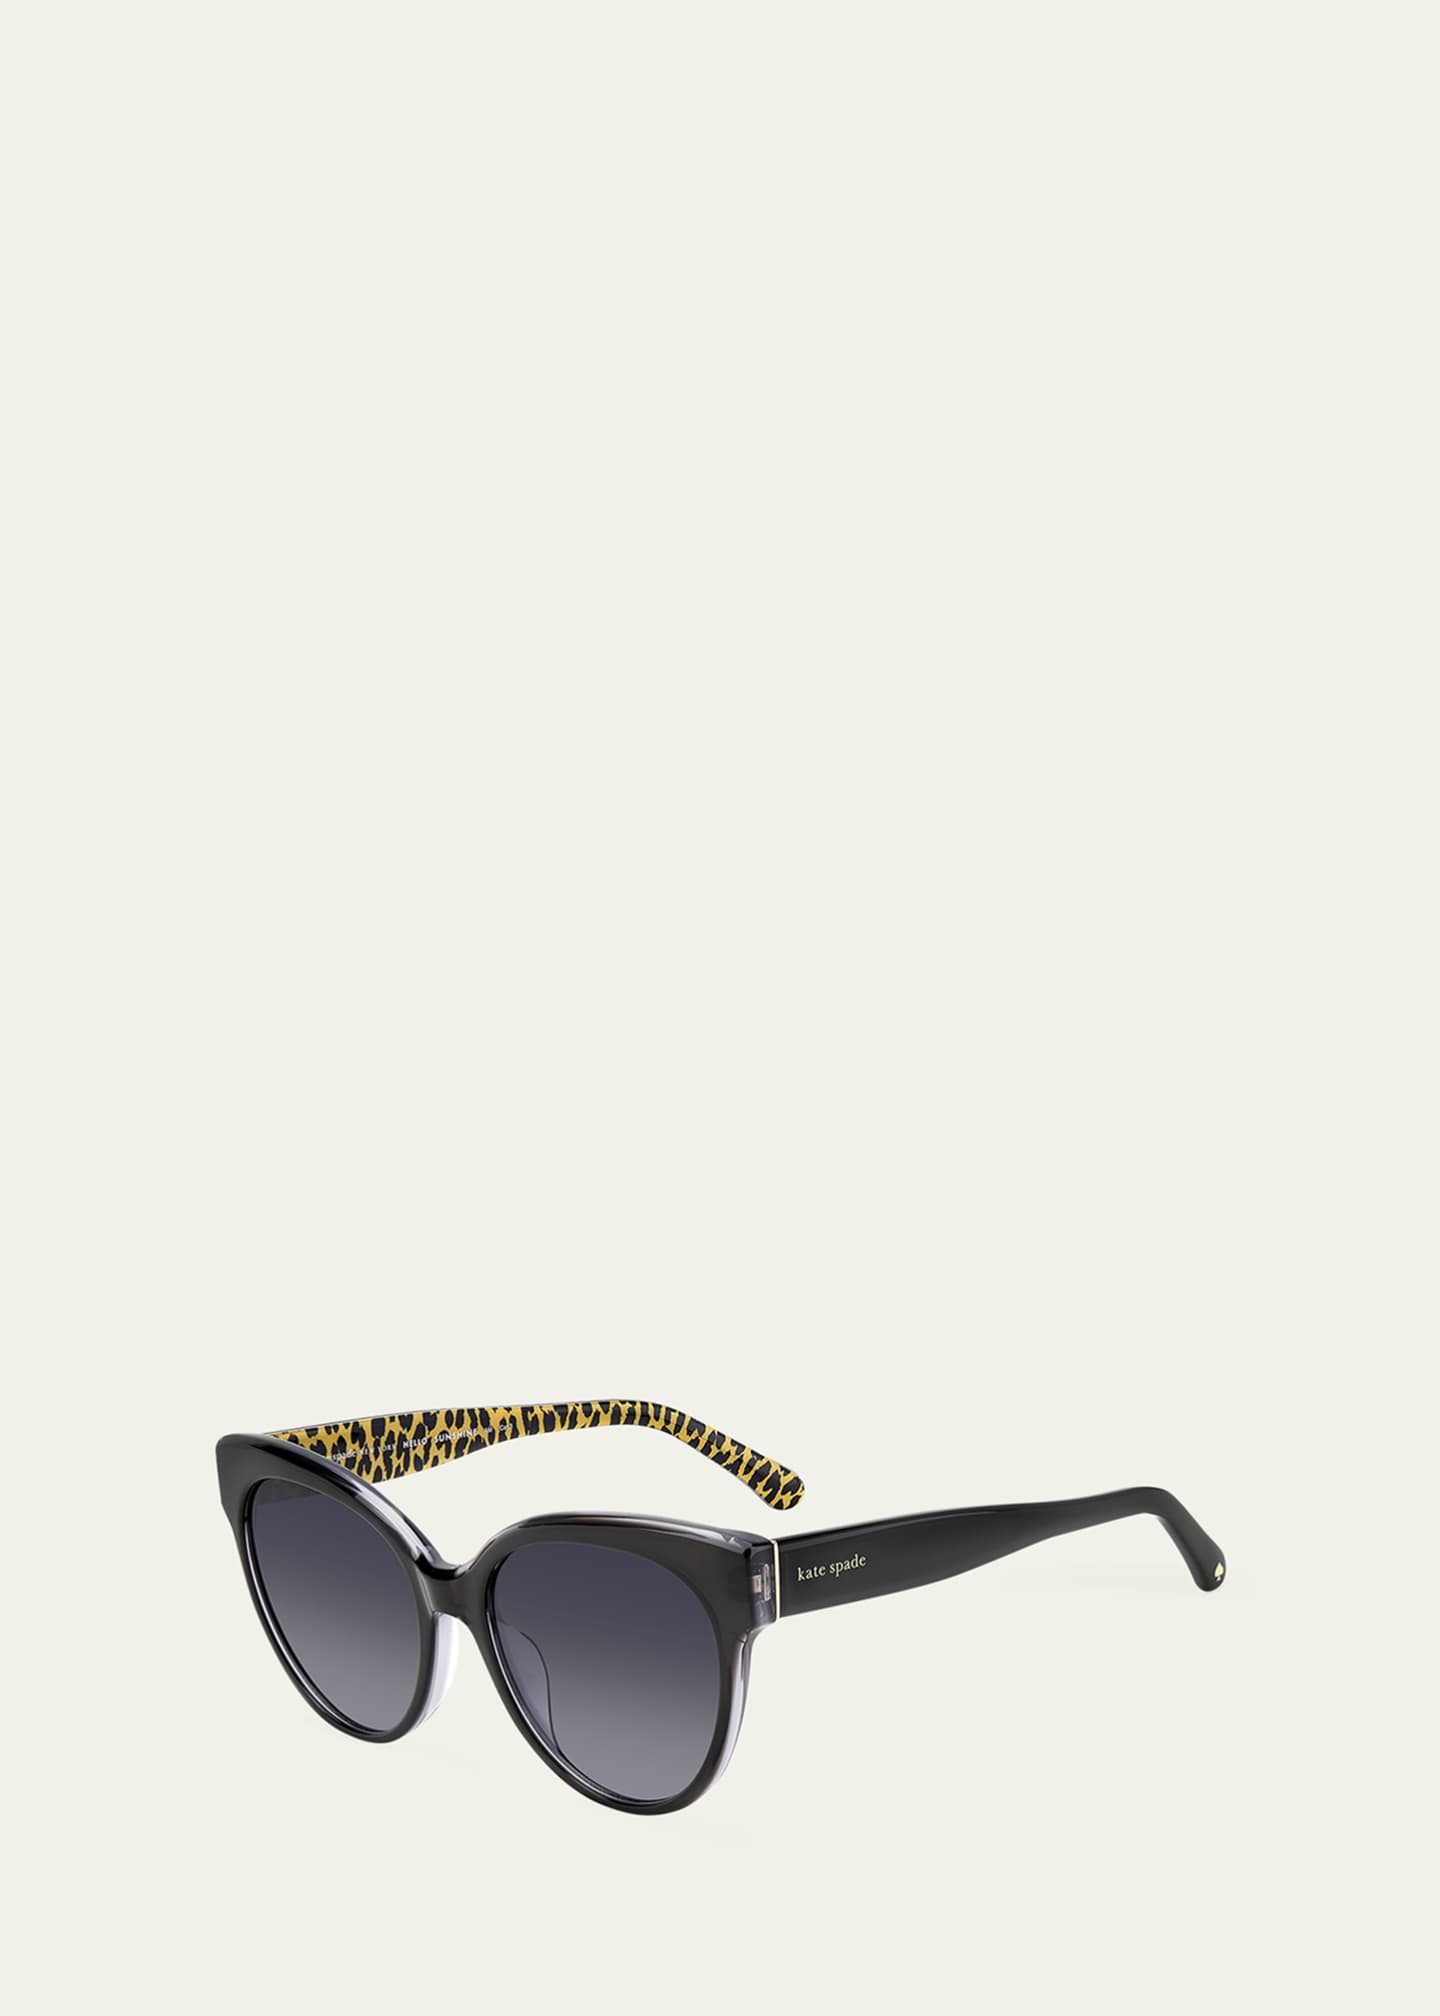 kate spade new york aubriela acetate round sunglasses - Bergdorf Goodman